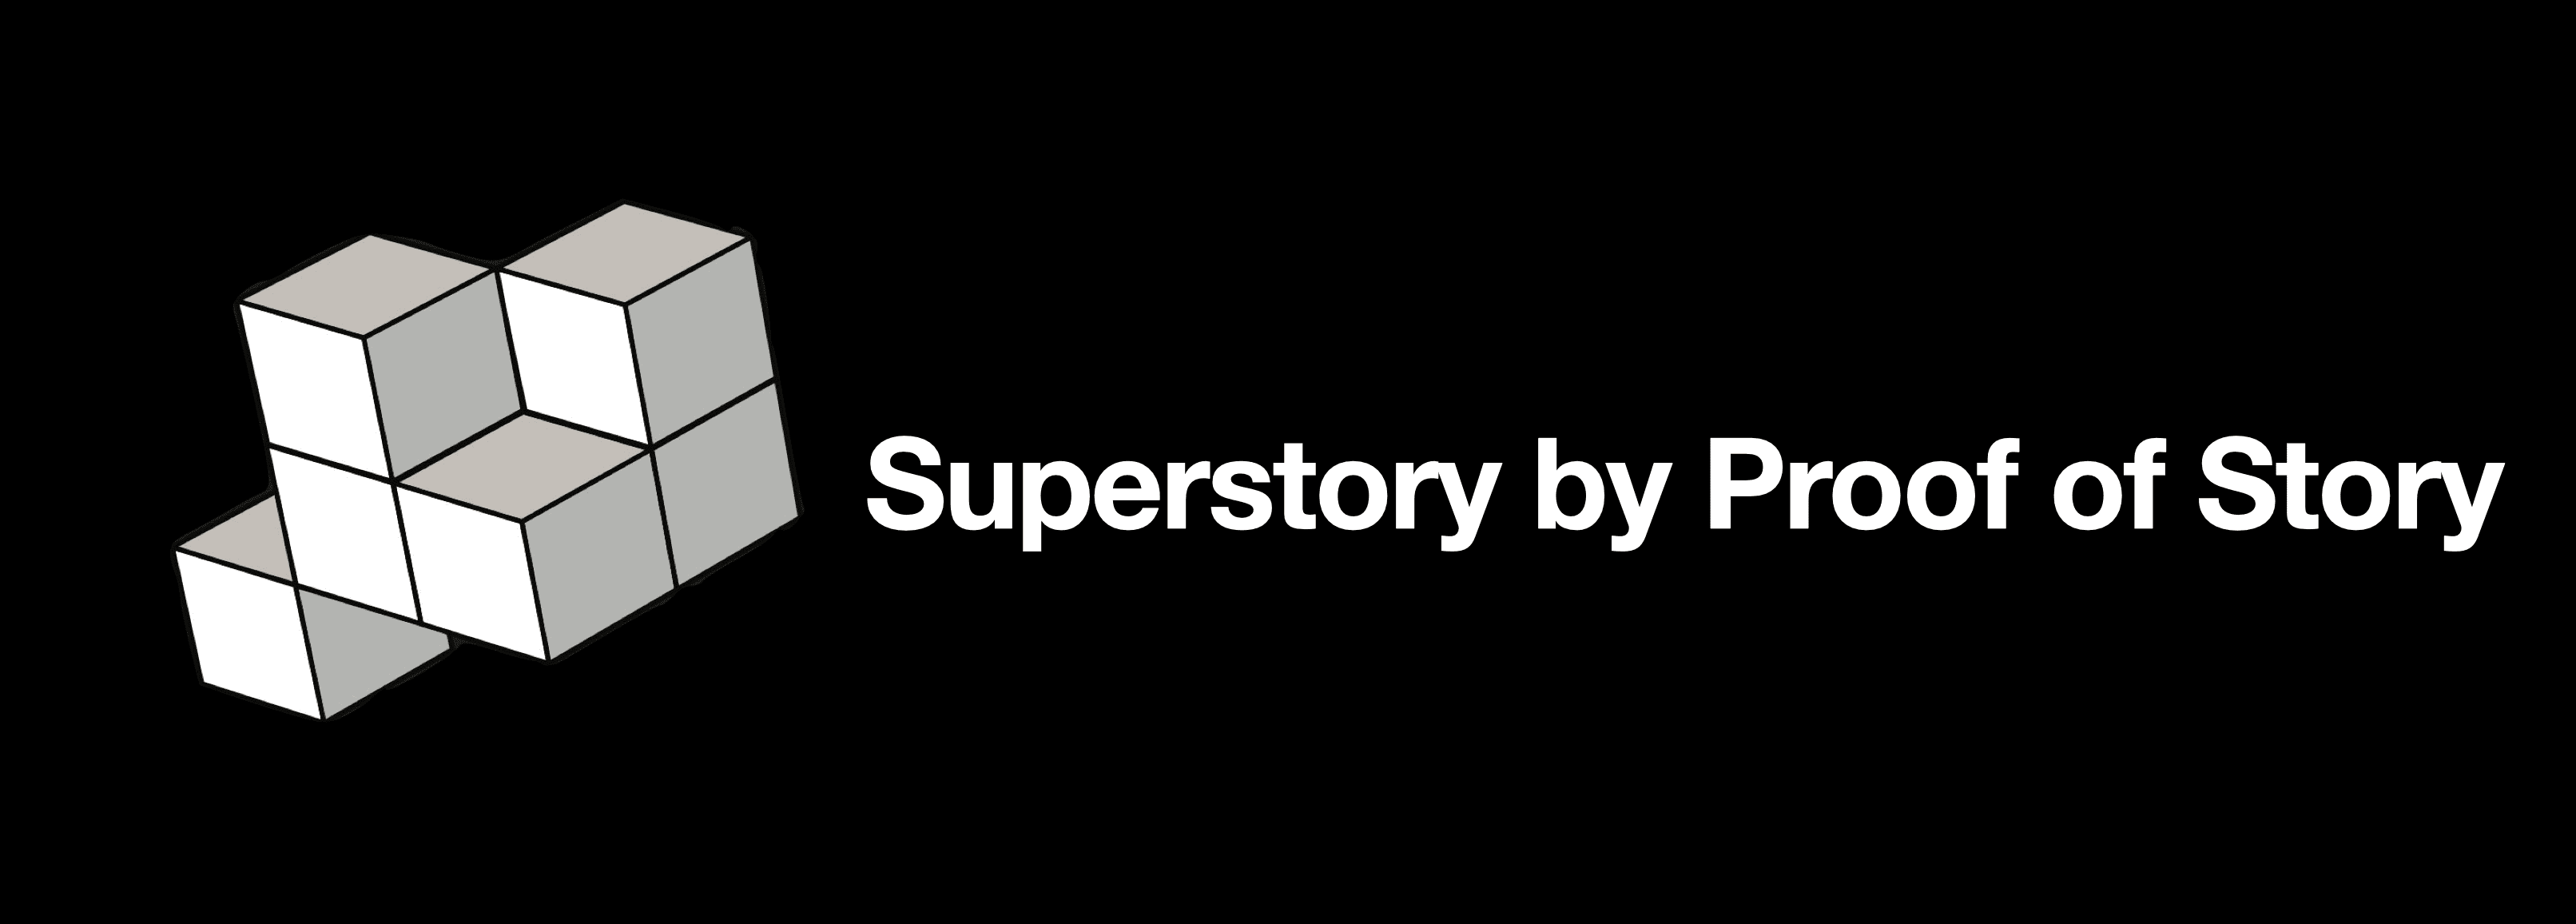 Superstory_Team banner